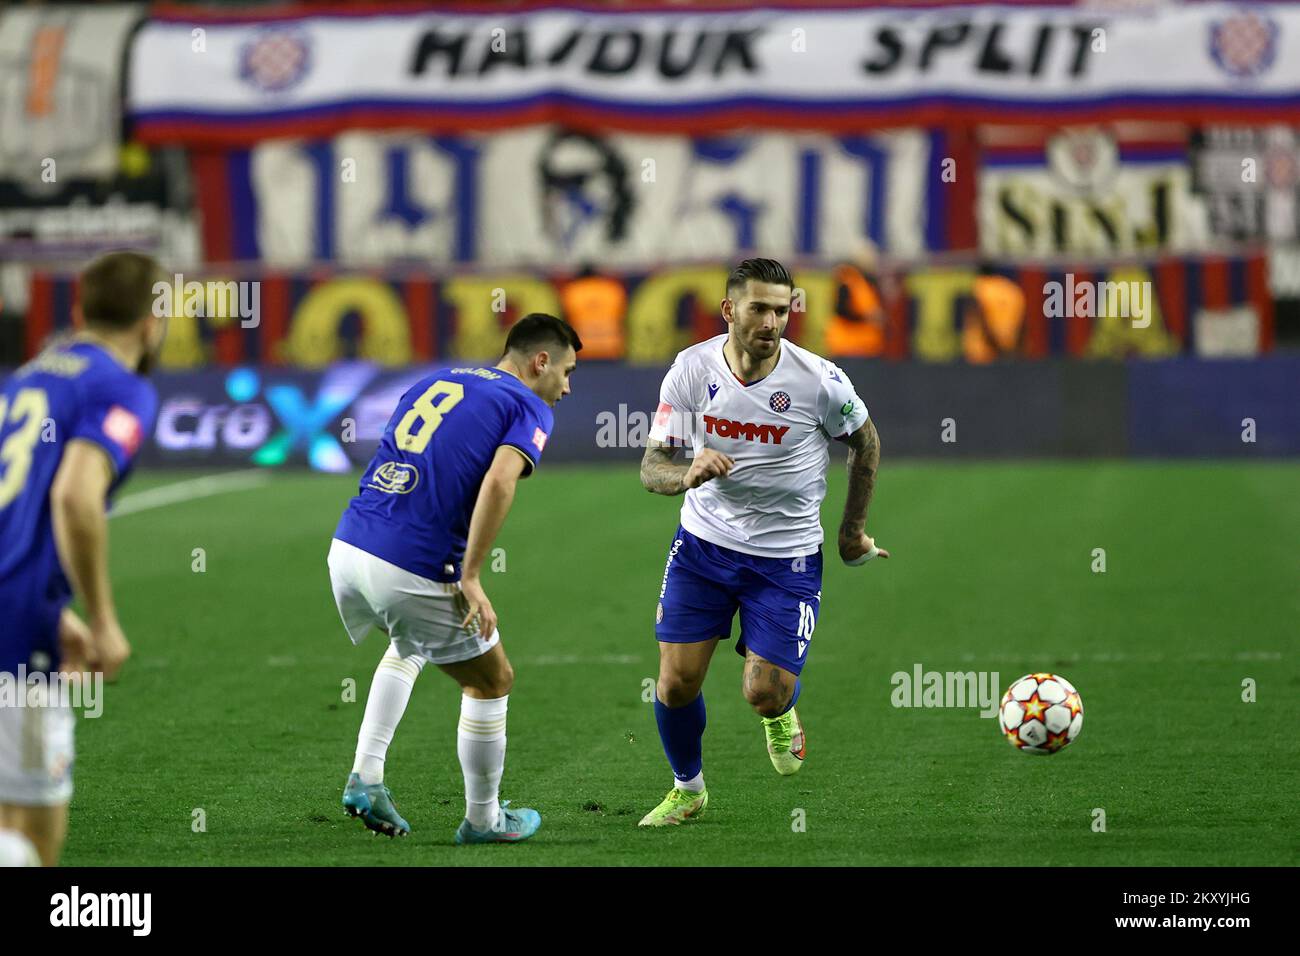 07 MAY 2019 Split, Croatia. Hajduk Split Football Stadium Editorial Image -  Image of hill, football: 155115560